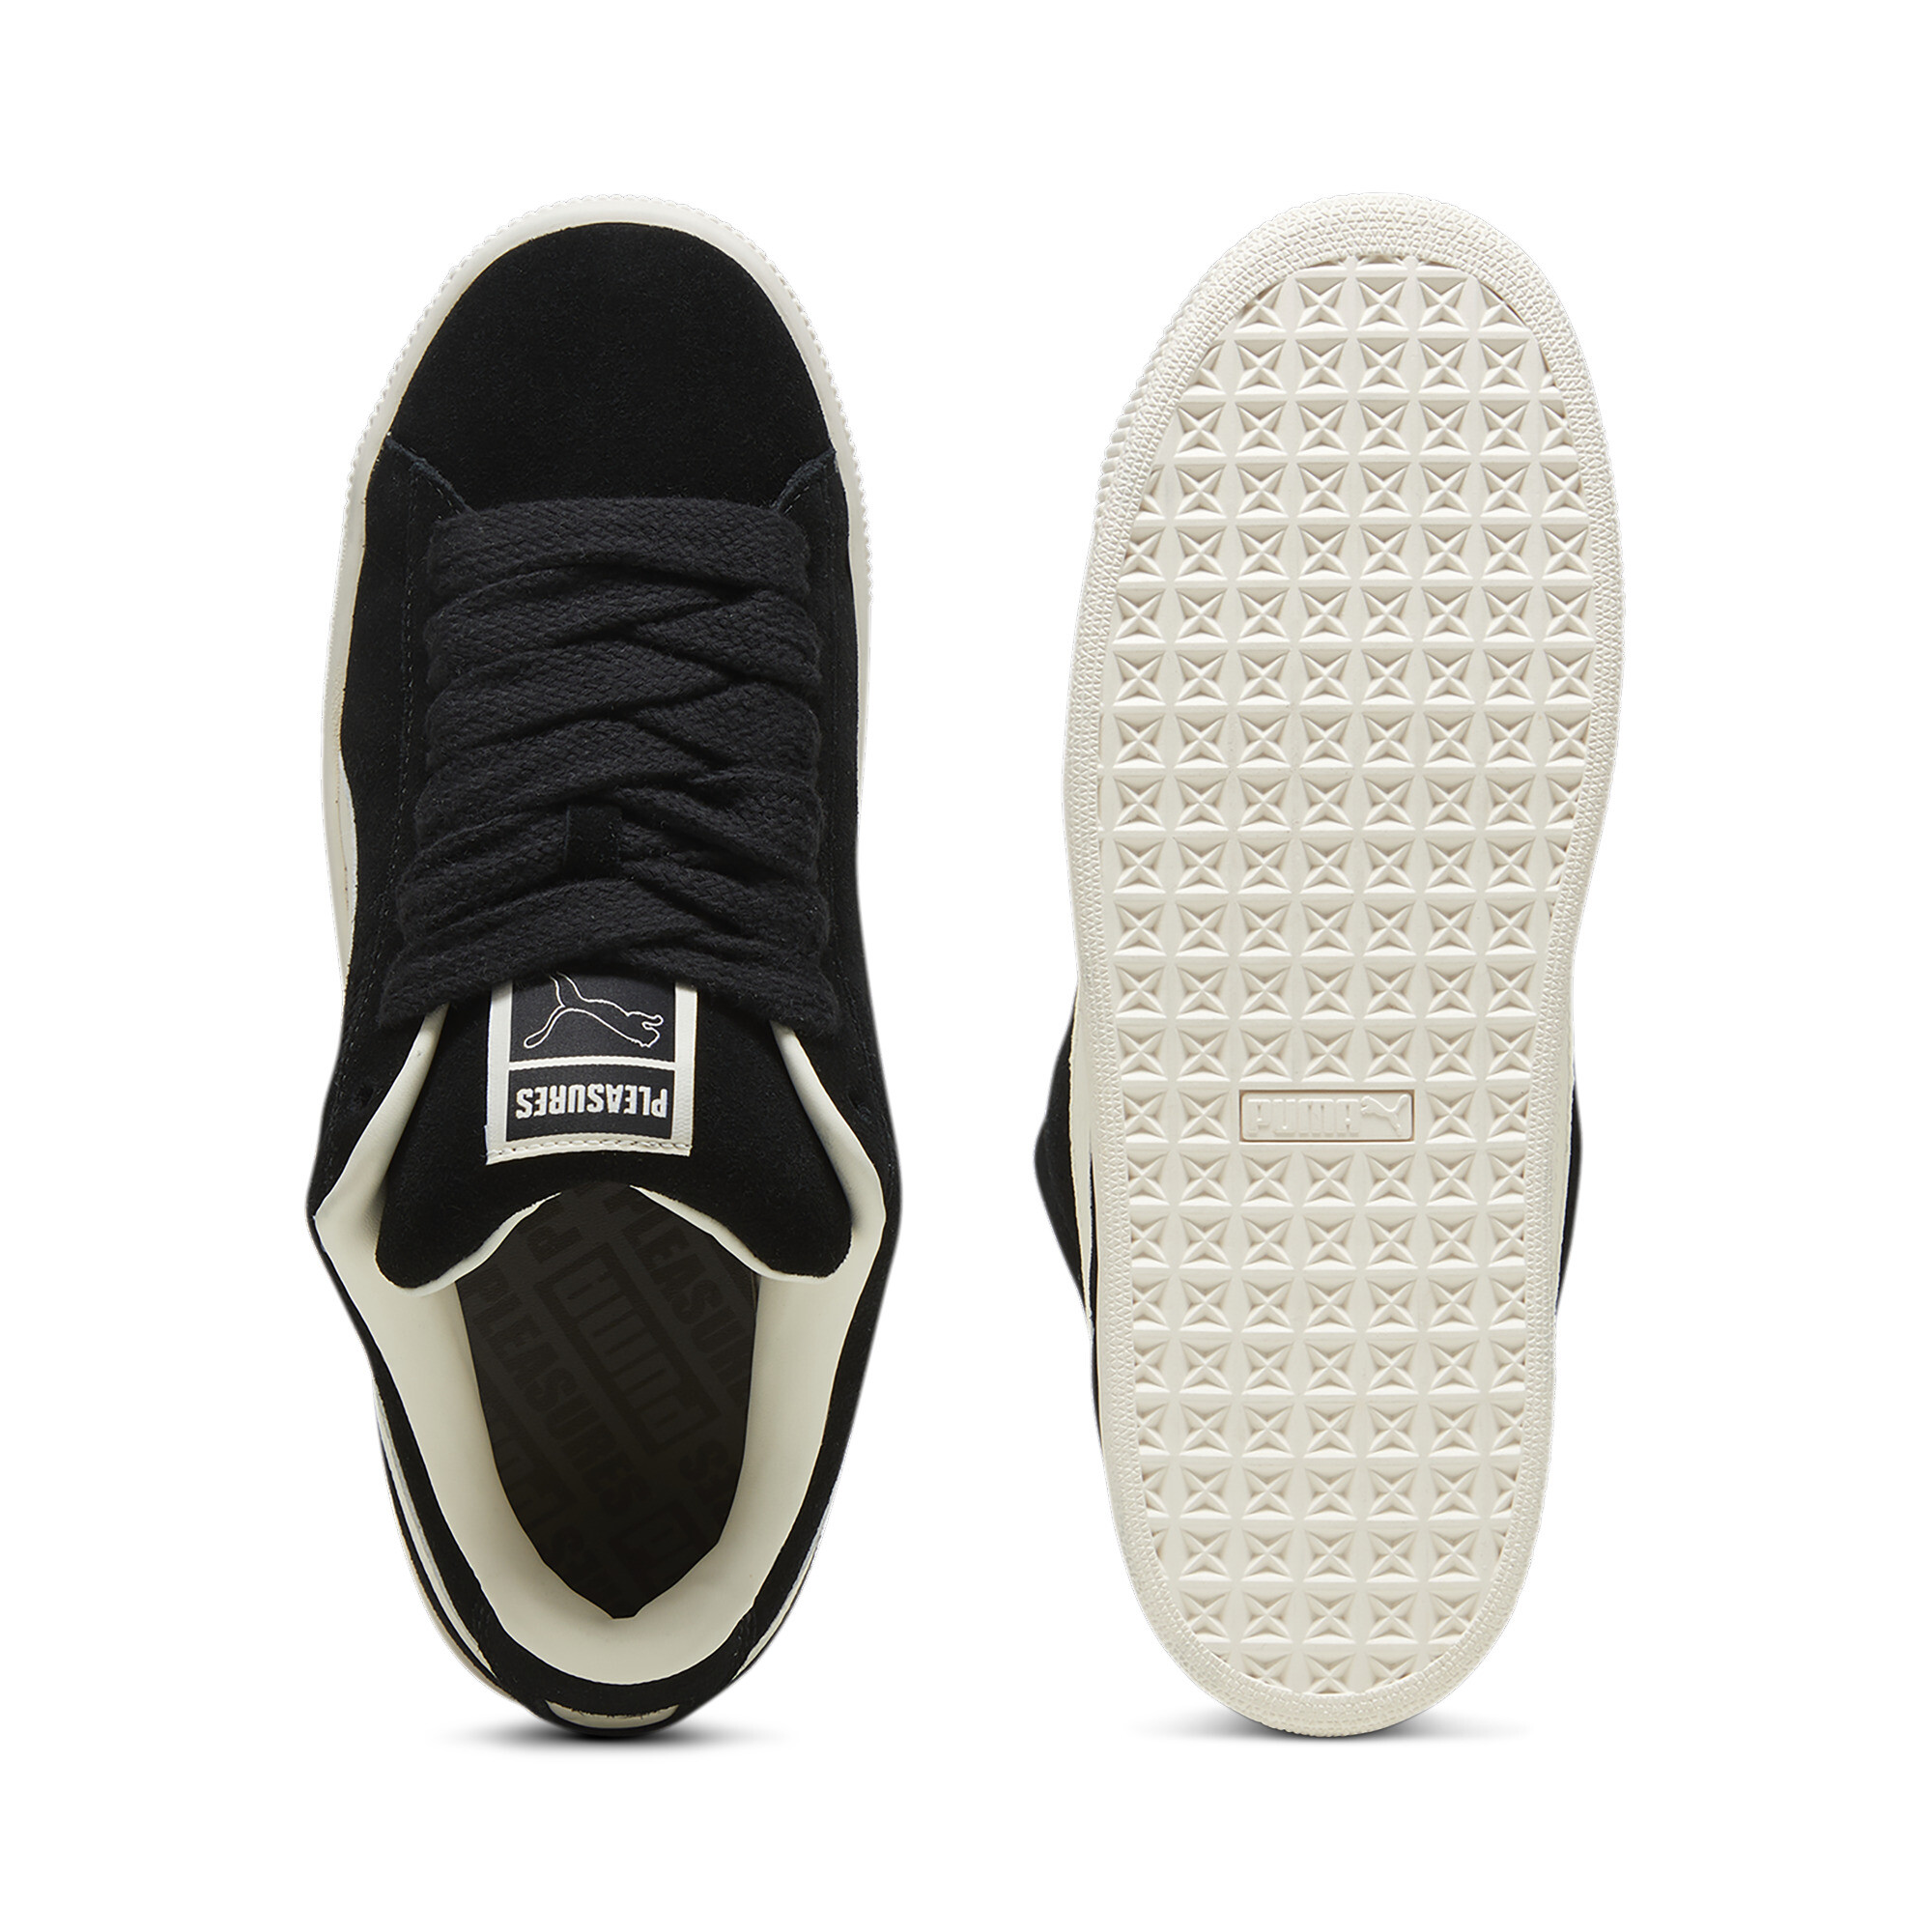 Men's PUMA X PLEASURES Suede XL Sneakers In Black, Size EU 40.5